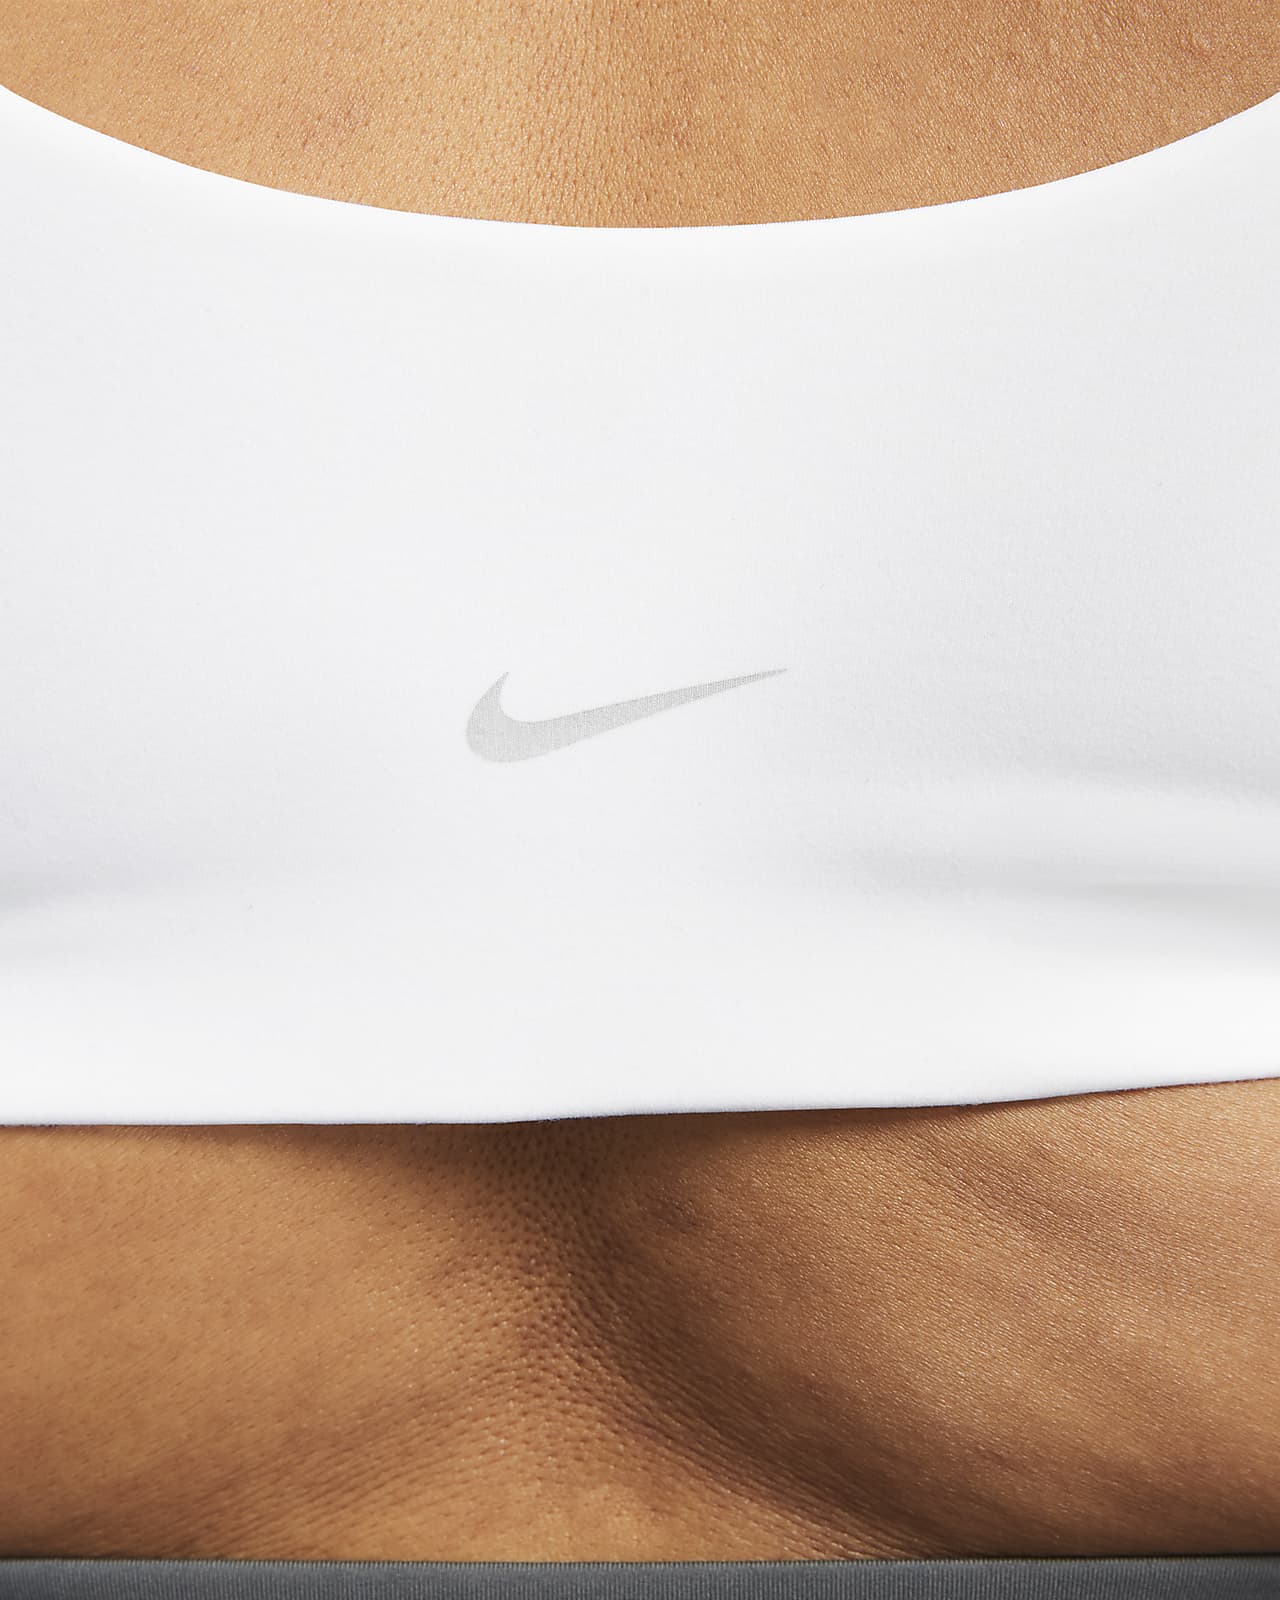 Nike Alate All U Light Support Sports Bra in White, White, & Black